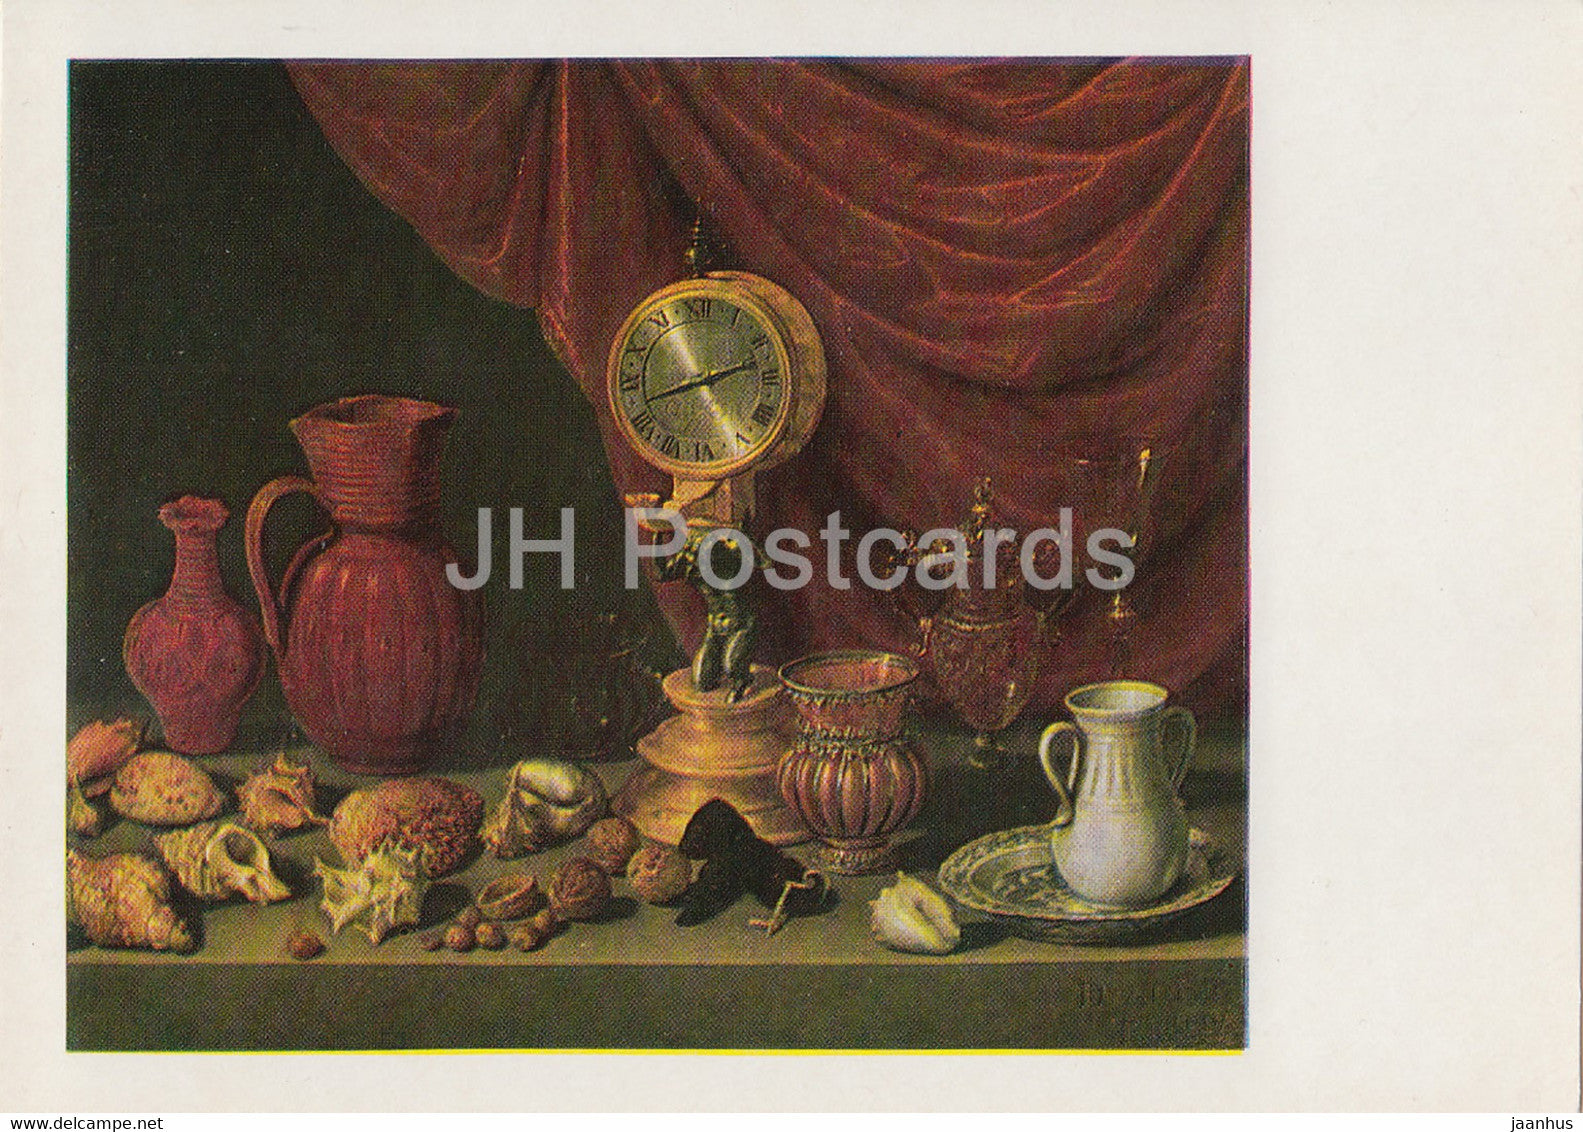 painting by Antonio de Pereda - Still Life with Clock - shell - jug - Spanish art - 1982 - Russia USSR - unused - JH Postcards